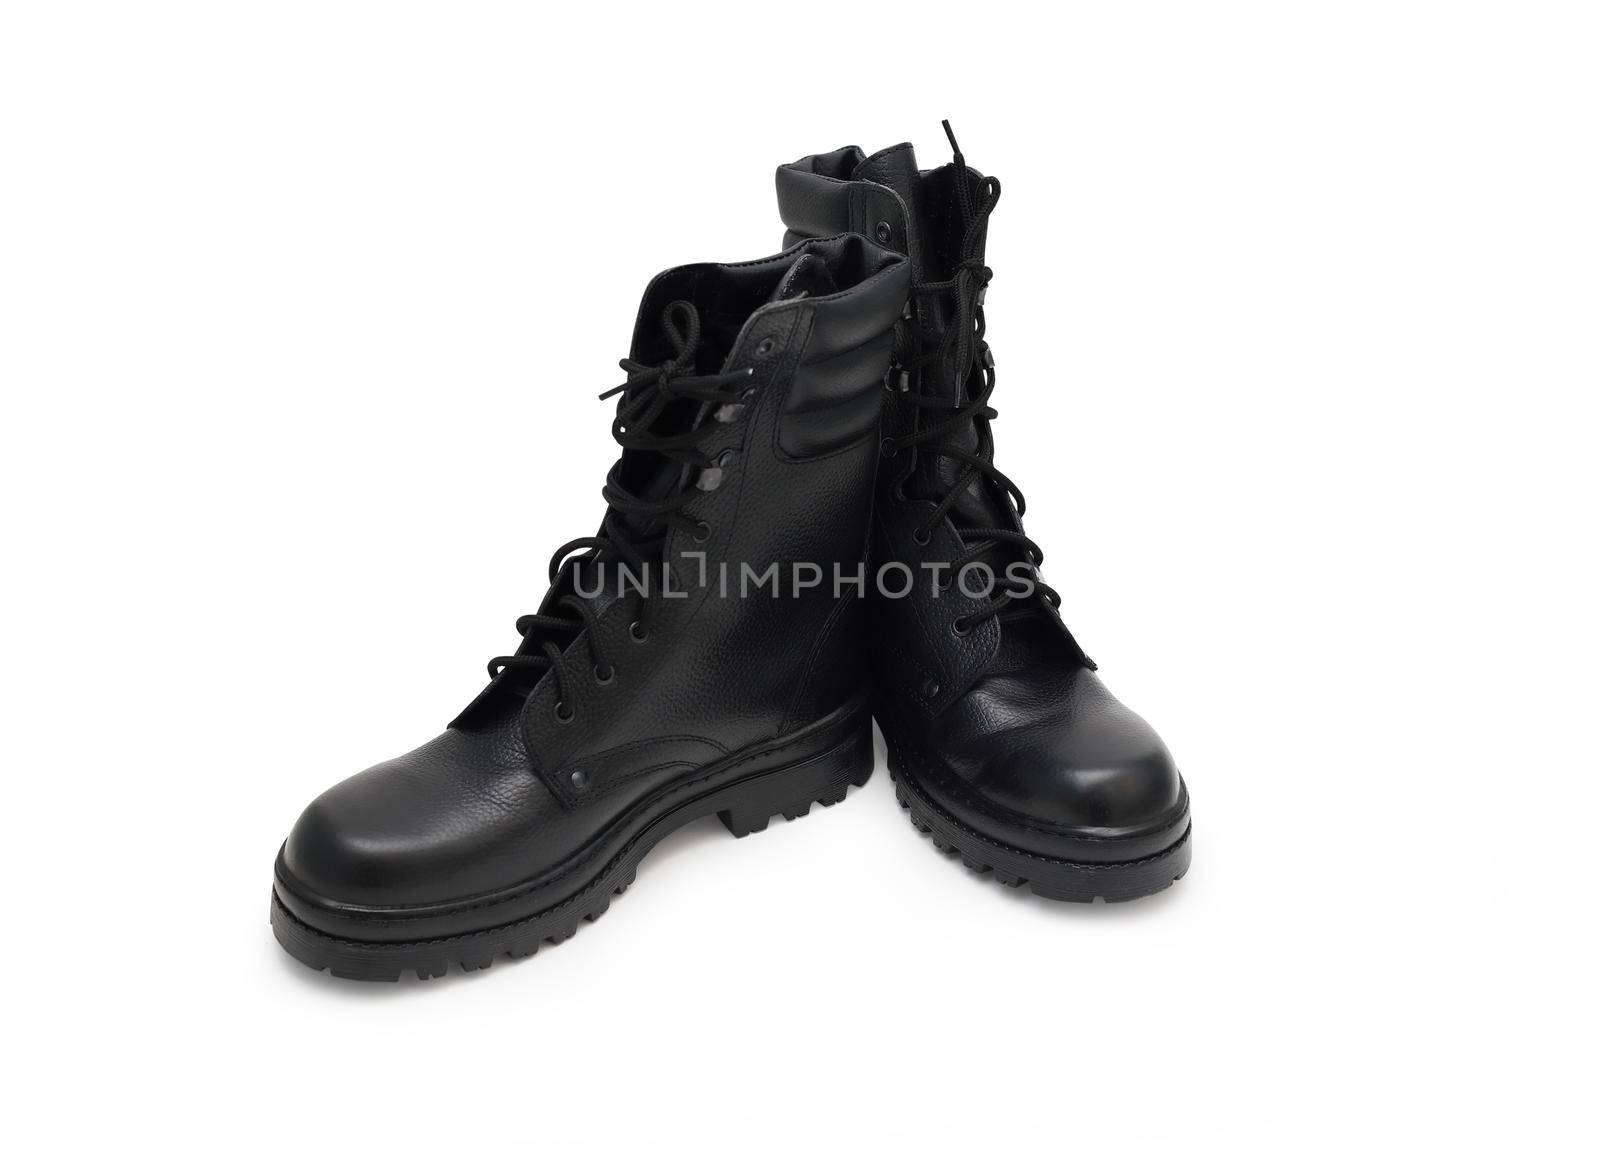 Black Military Boots by kvkirillov